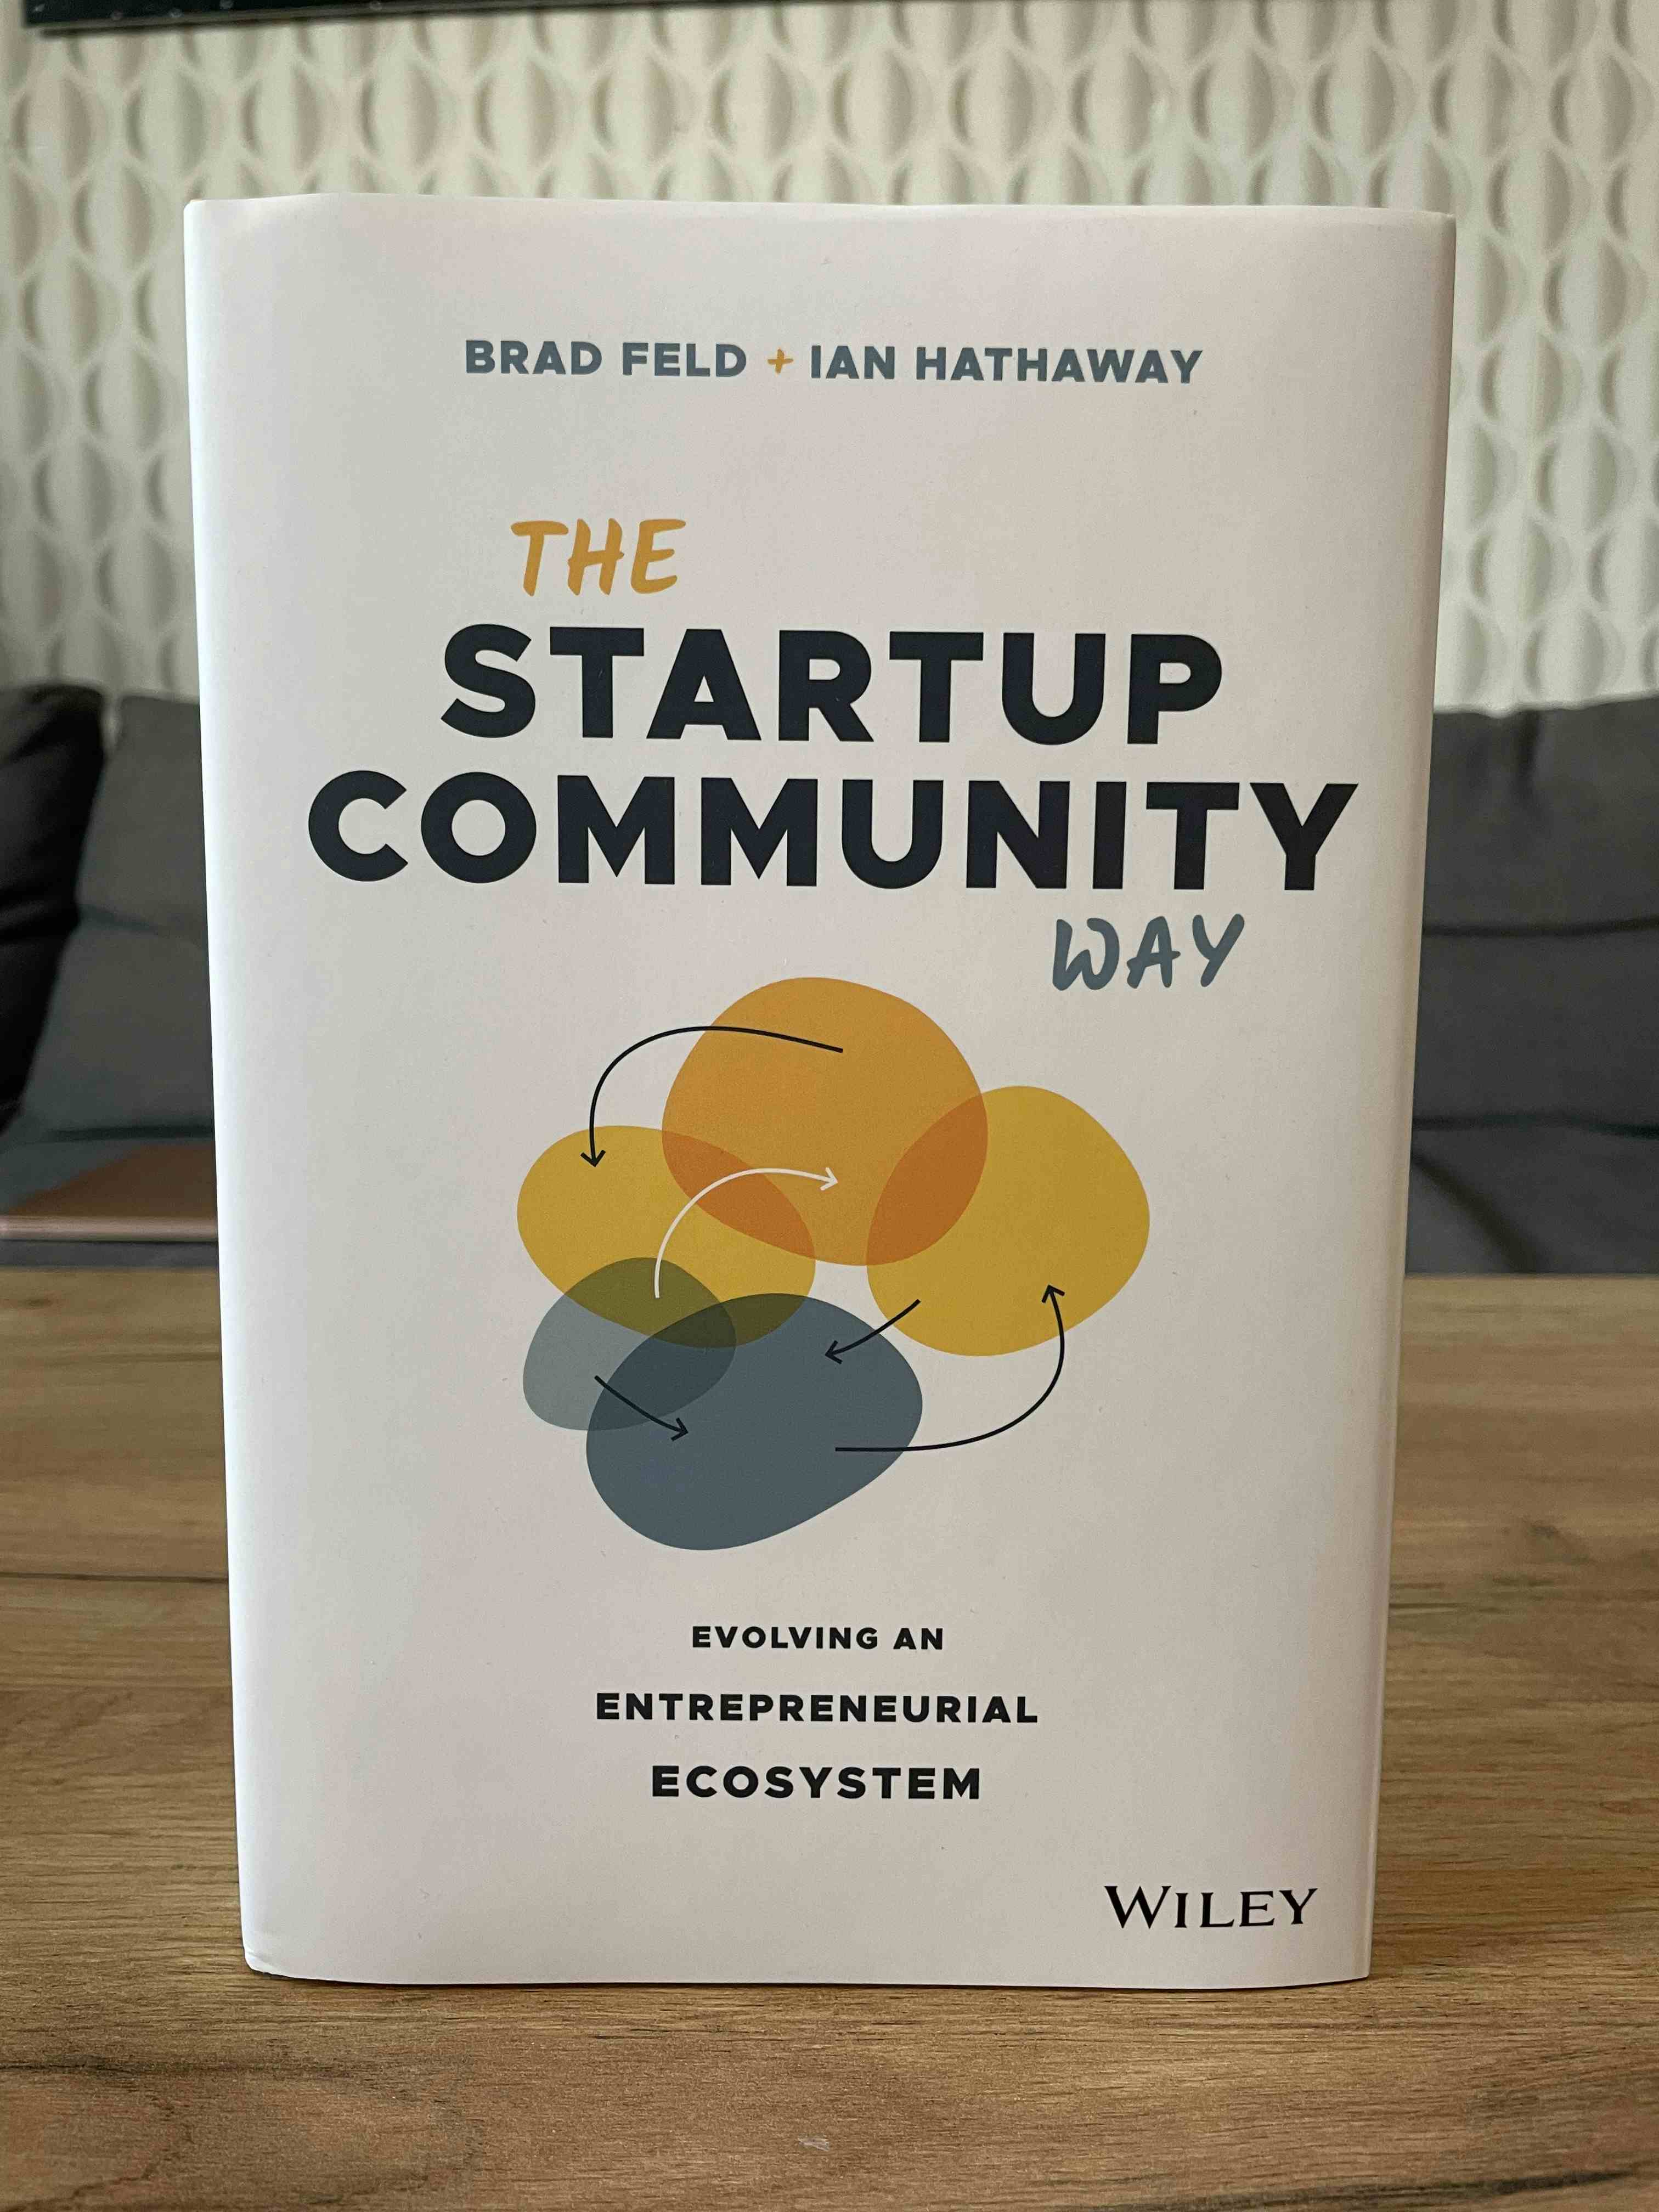 Primary picture of Książka "The Startup Community Way". Autorzy: Brad Feld + Ian Hathaway